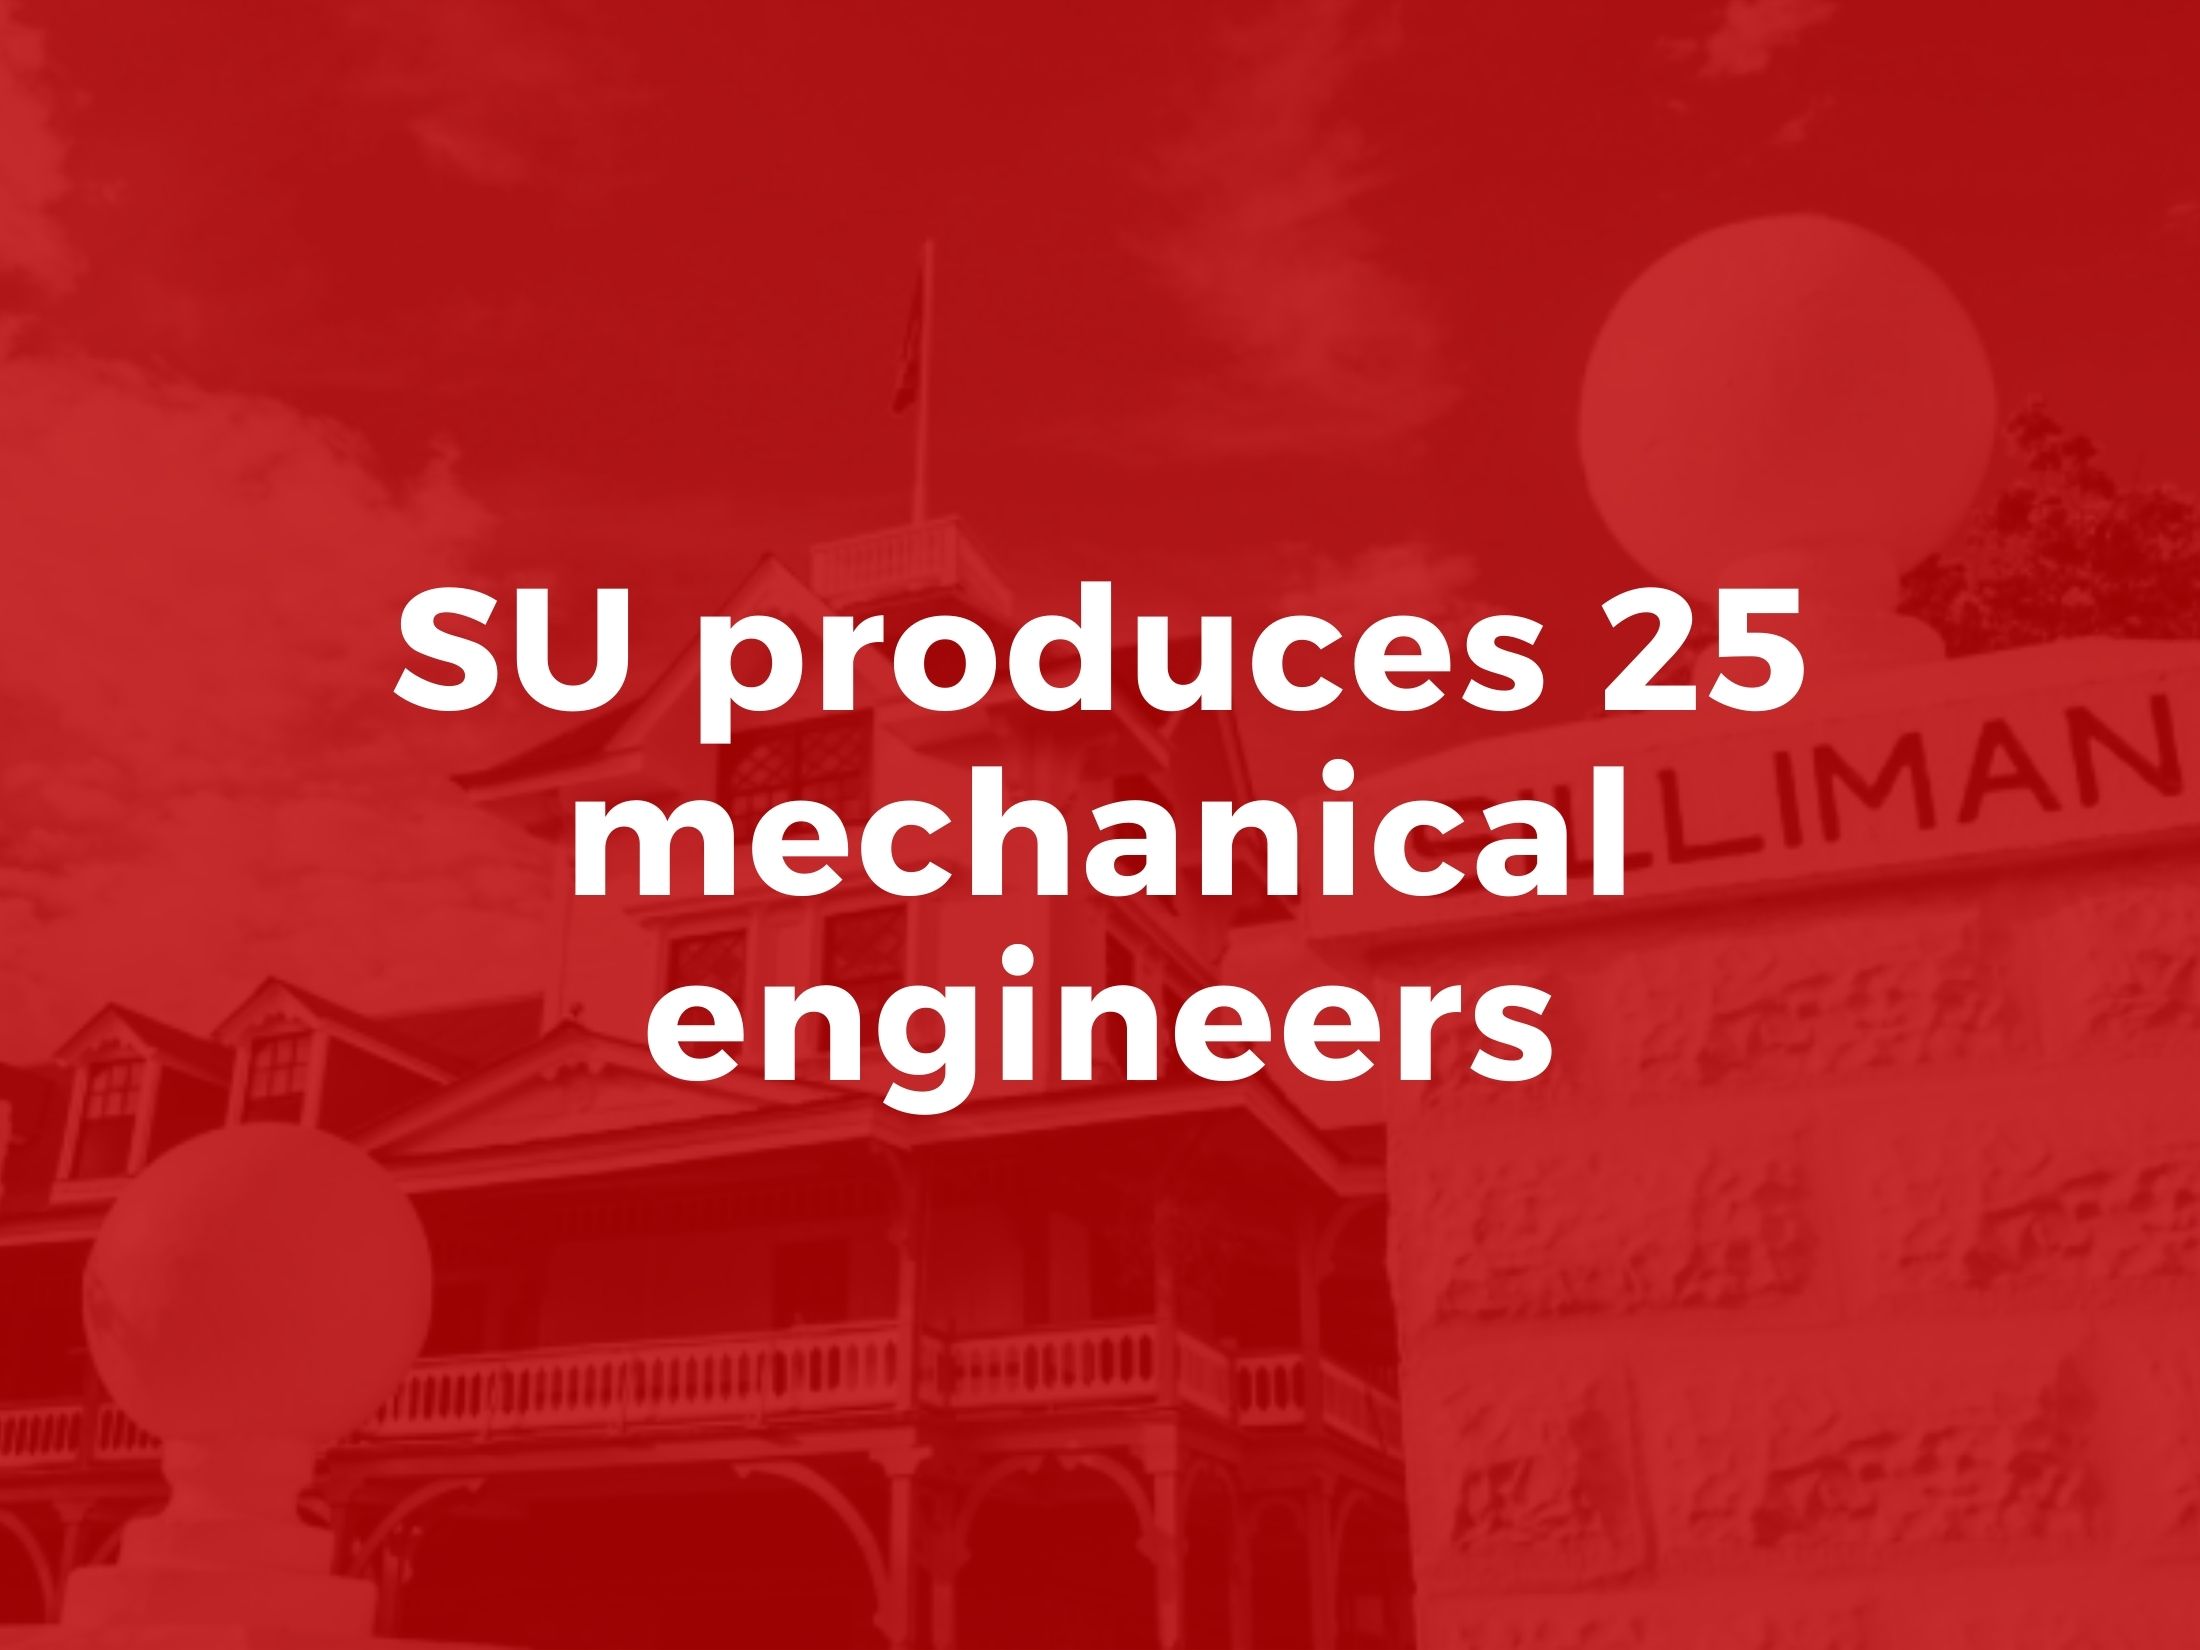 SU produces 25 mechanical engineers